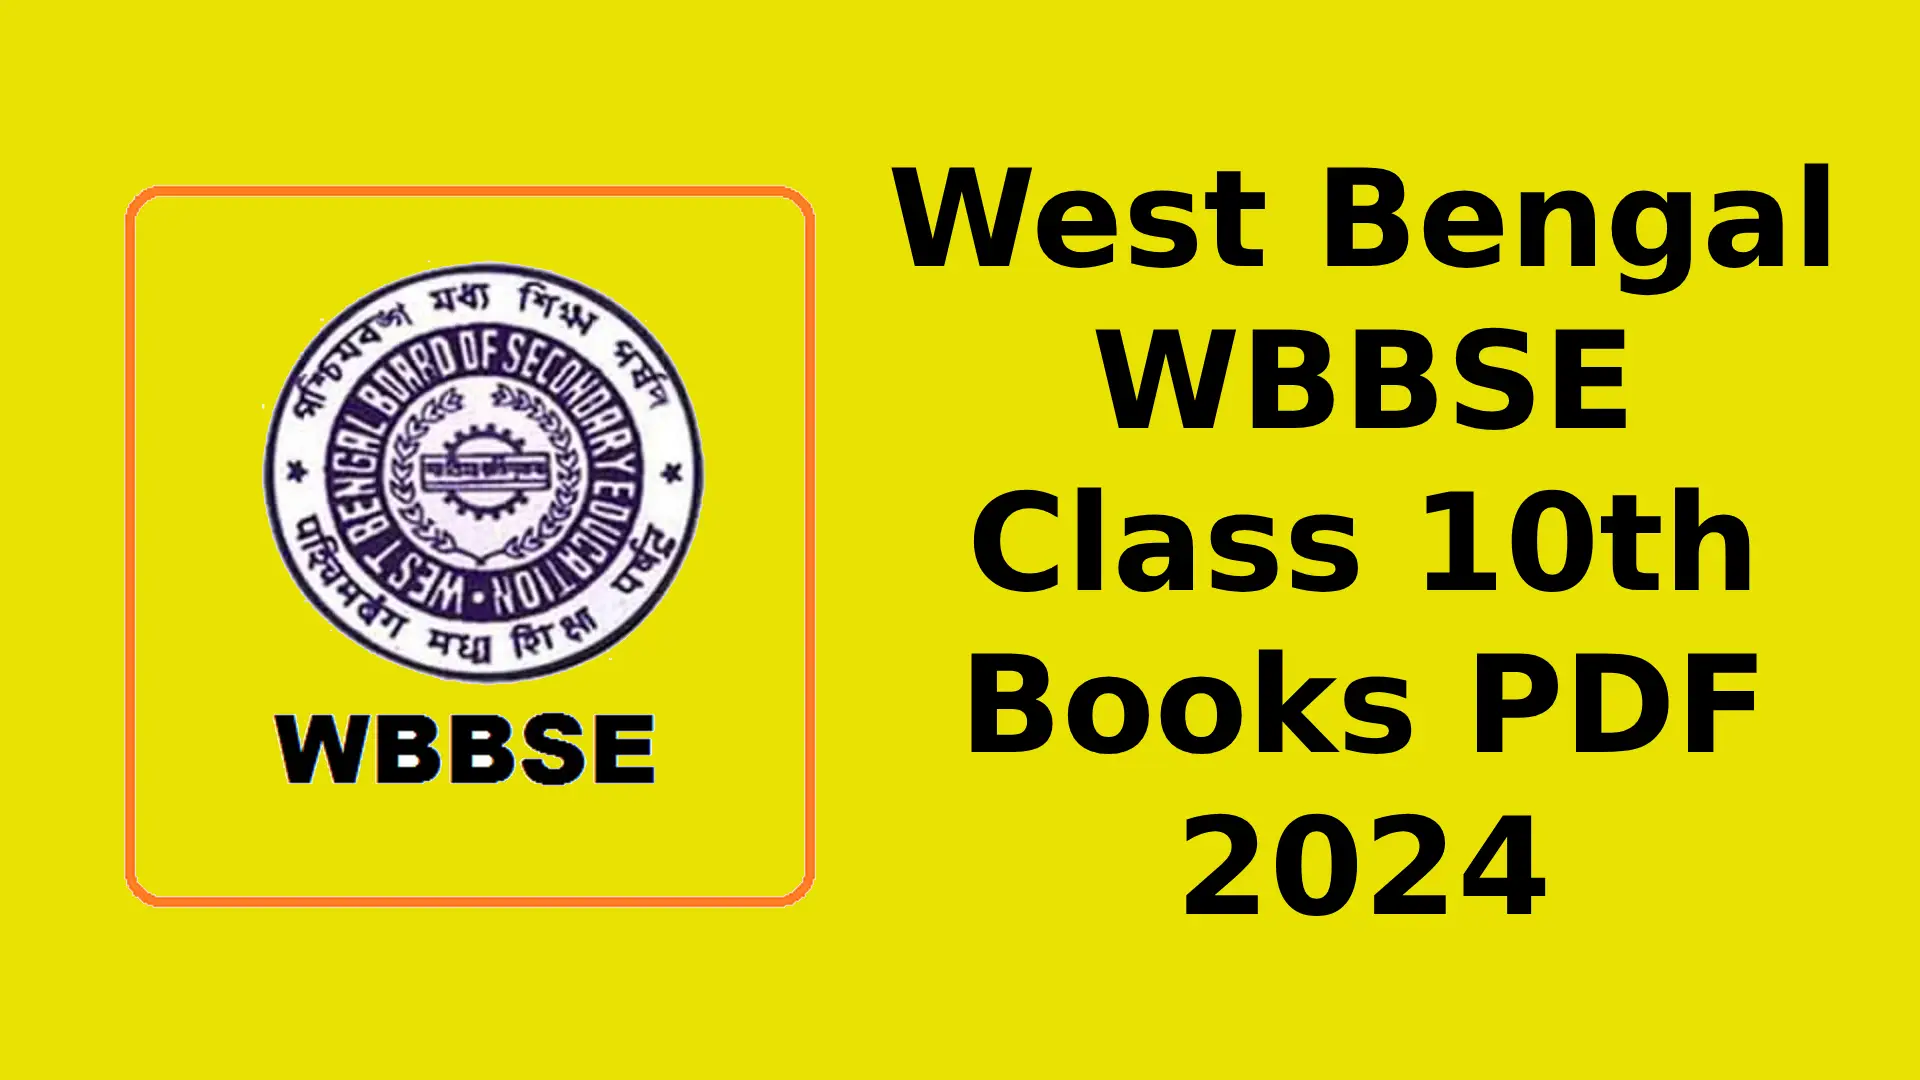 West Bengal WBBSE Class 10th Books PDF 2024